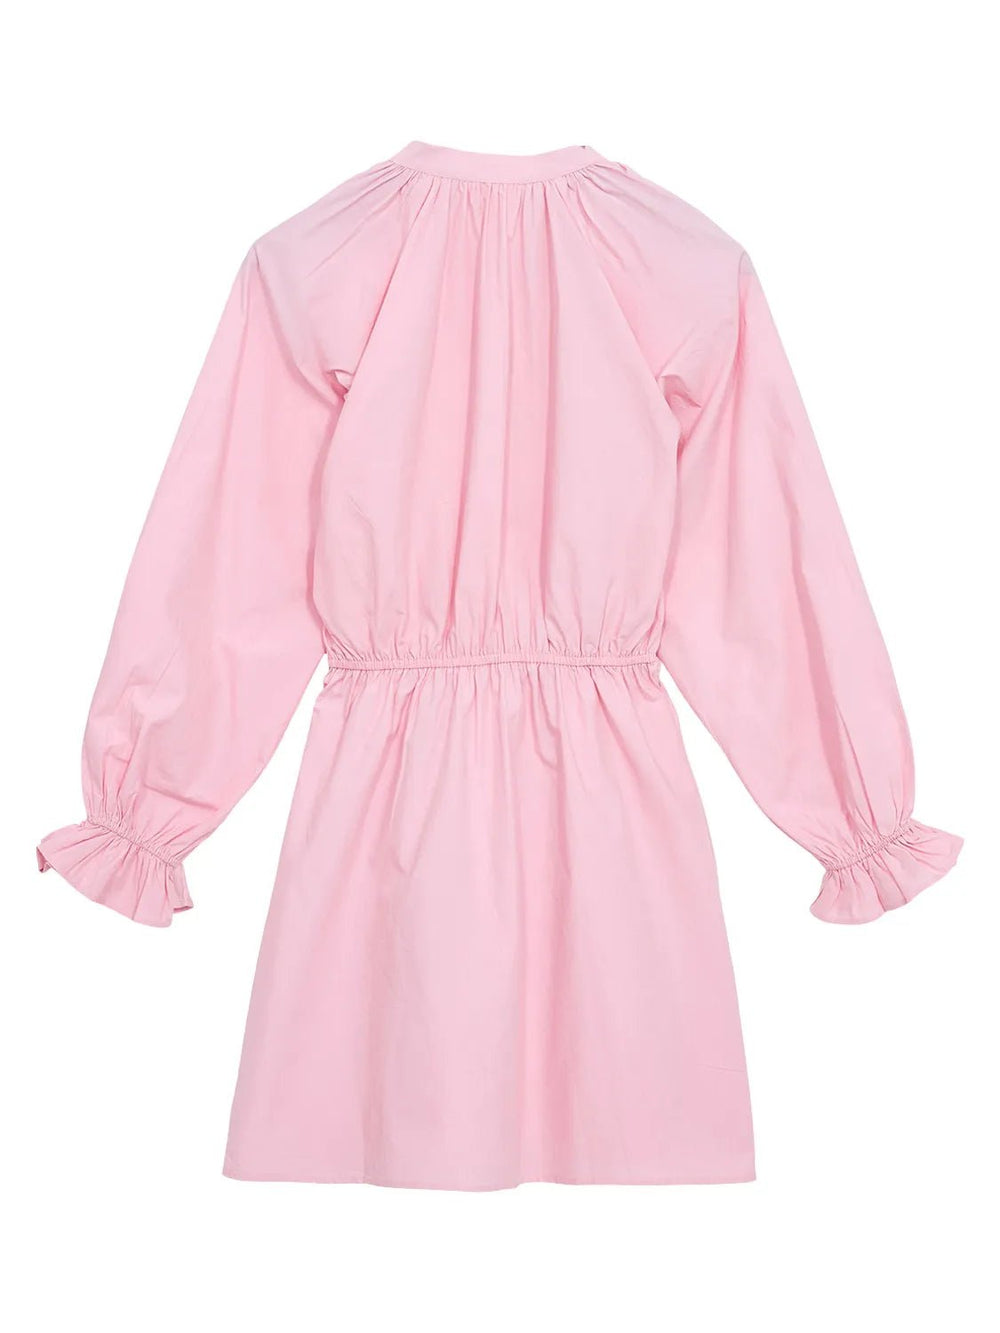 G Serena Raglan Dress - 419 Baby Pink - Posh New York